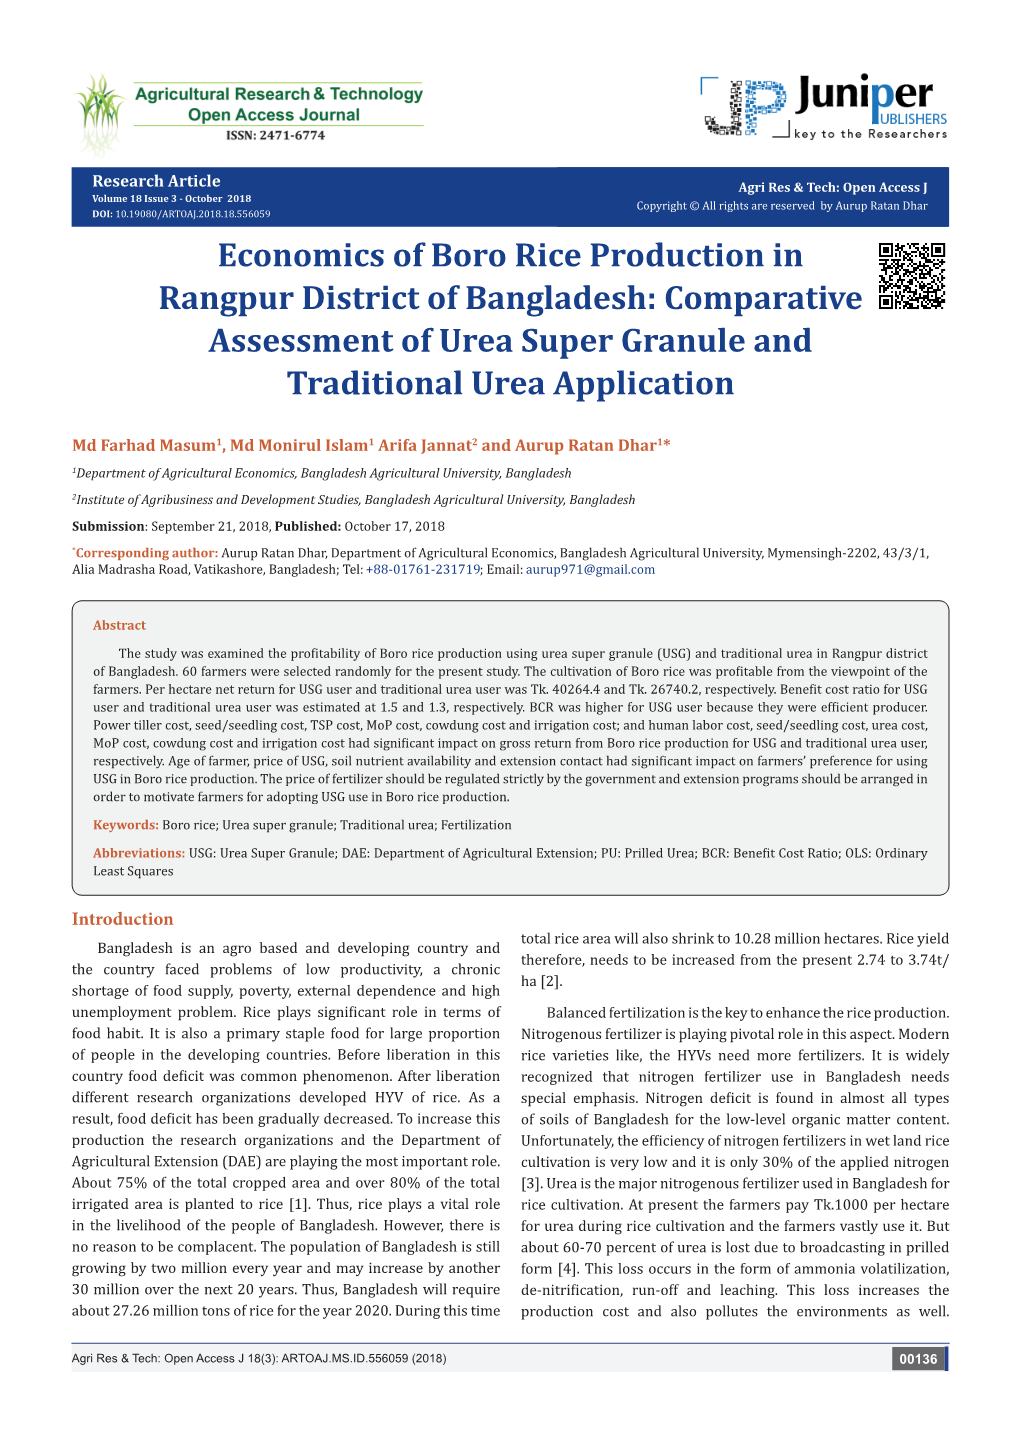 Economics of Boro Rice Production in Rangpur District of Bangladesh: Comparative Assessment of Urea Super Granule and Traditional Urea Application